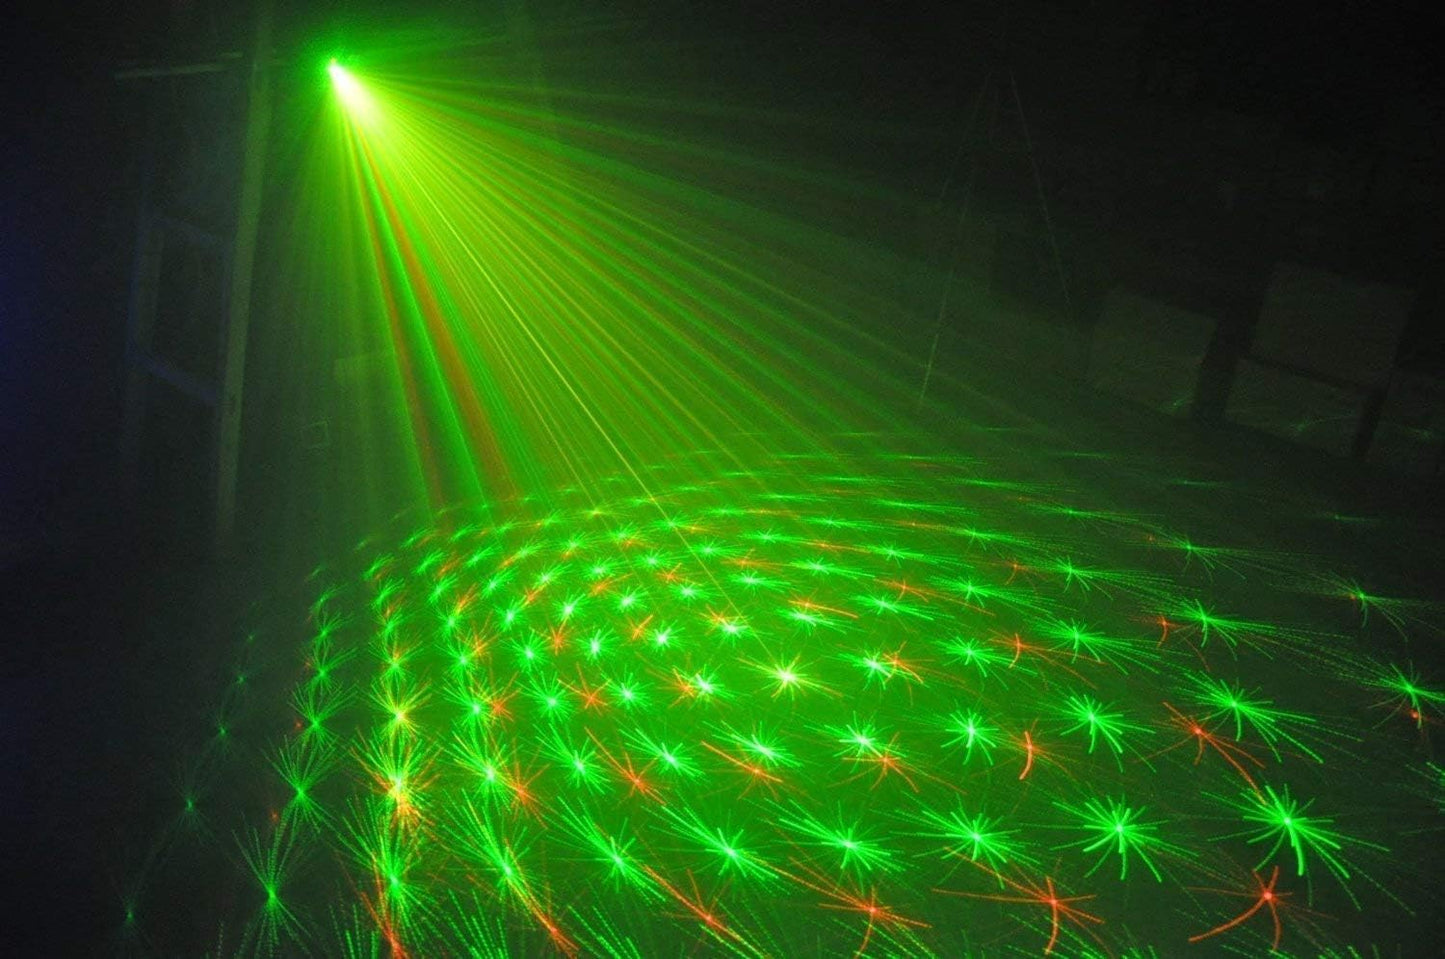 Mini Laser Light LED Multicolor RGB Stage Lighting with Mini Tripod Stand (Black)